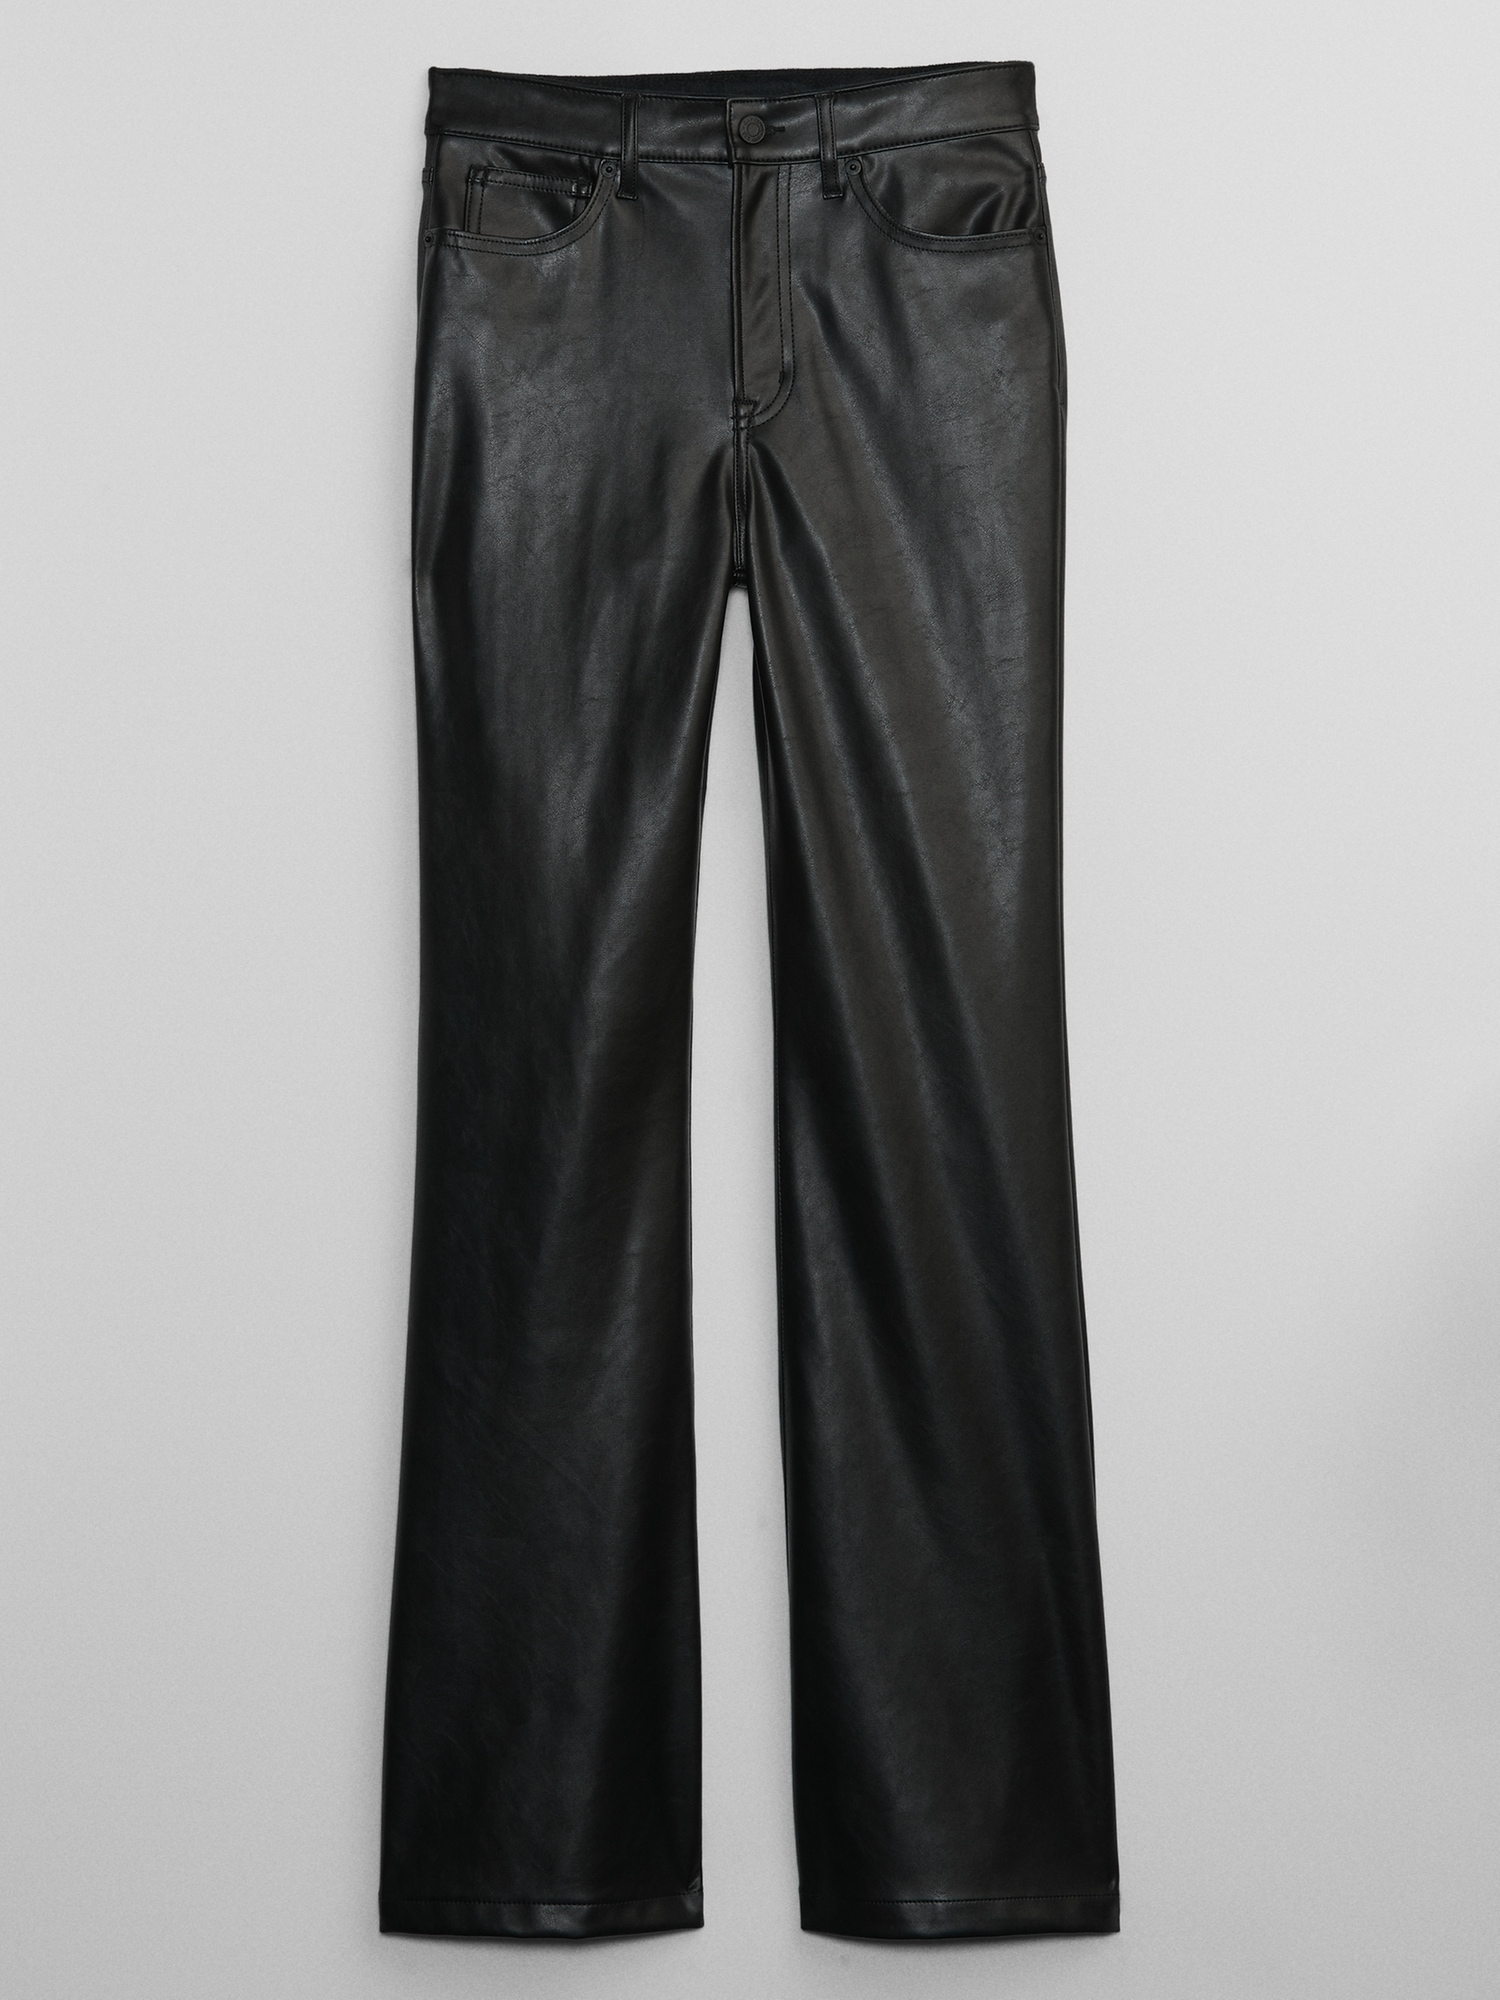 High Waisted Leather Flare Pants - Hemline Lubbock